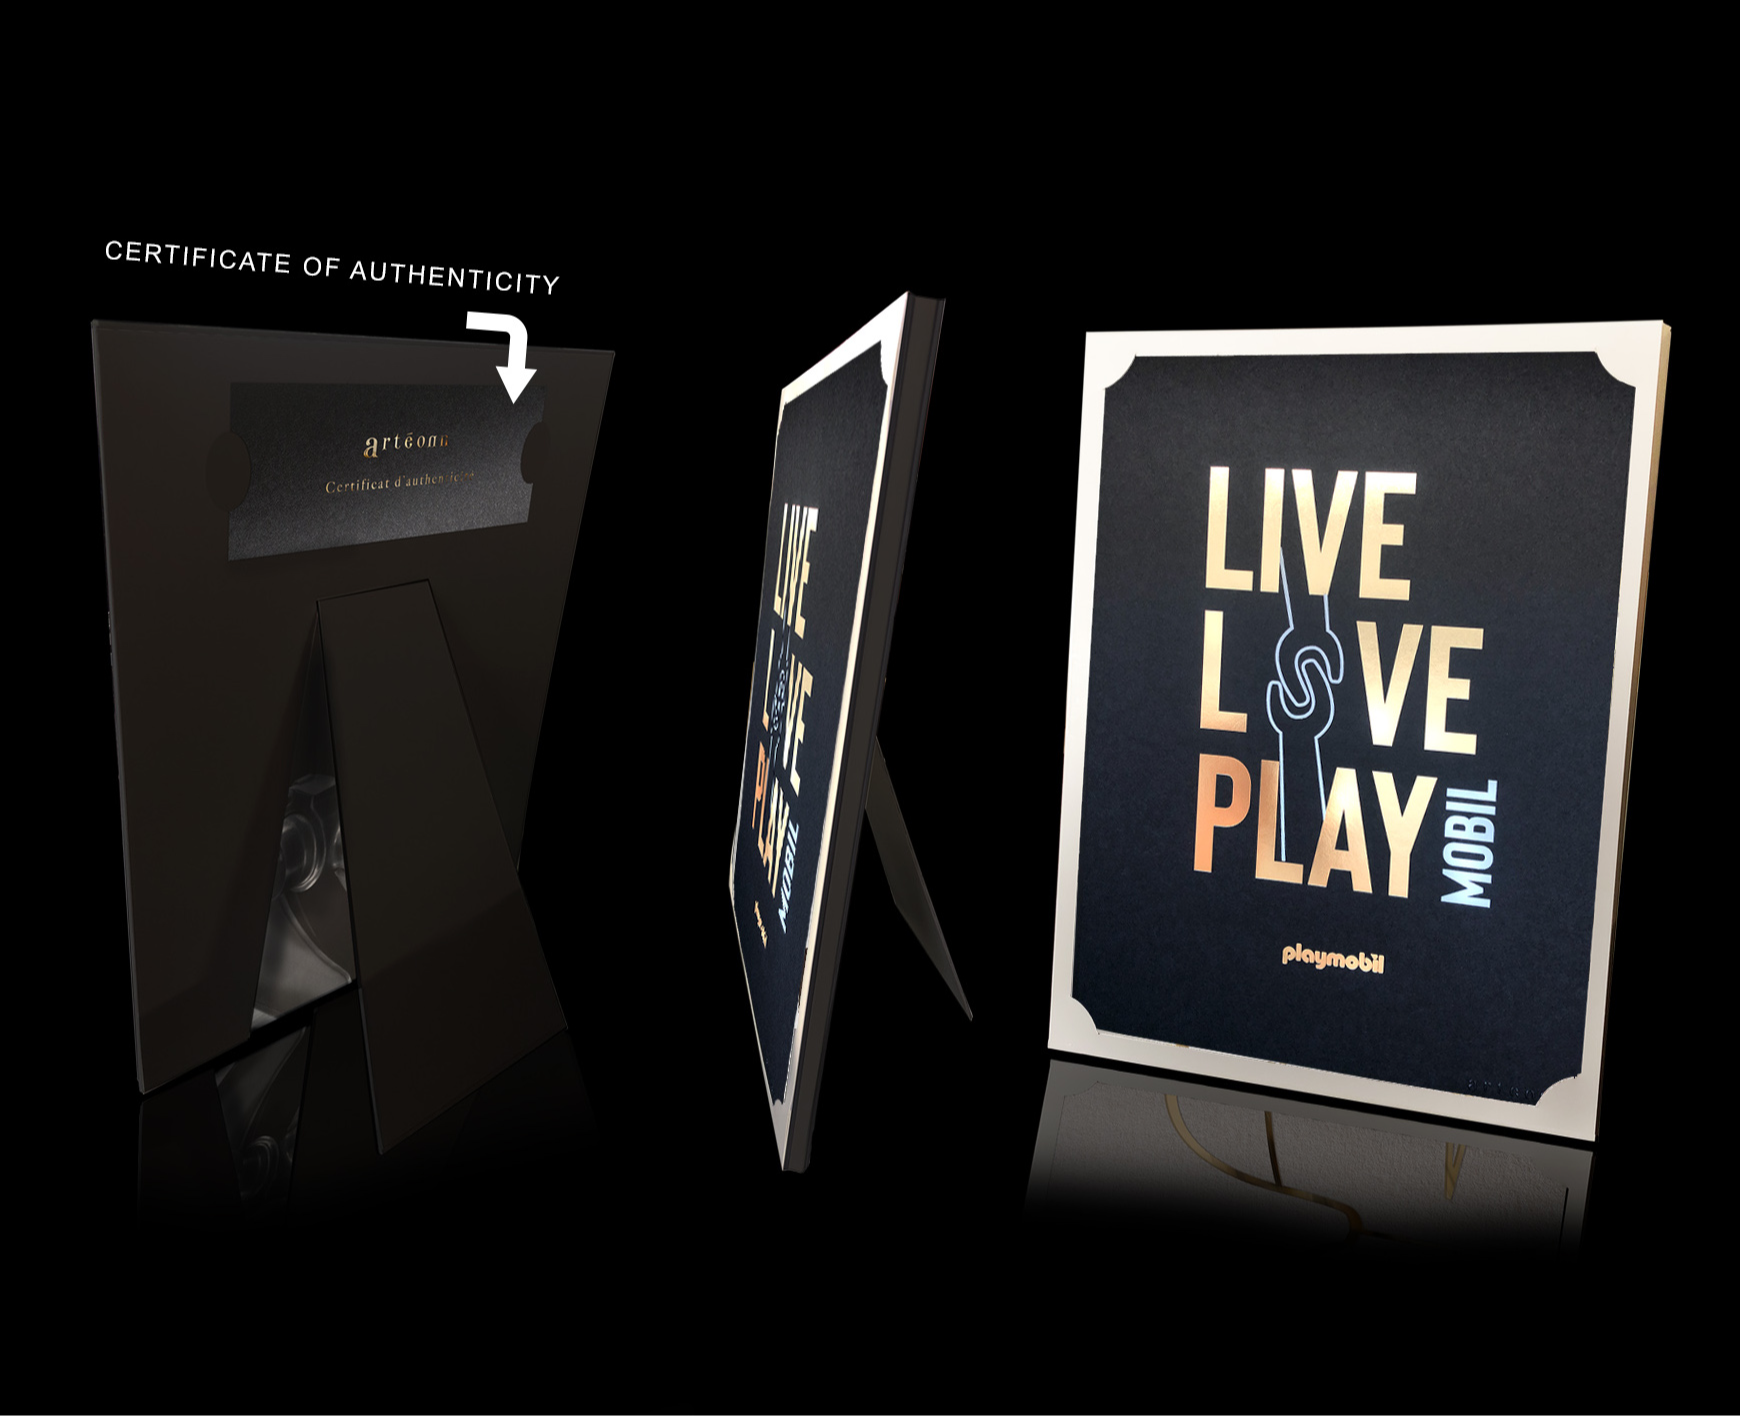 Arteonn Playmobil Live Love Art Print Self-Holder Packaging